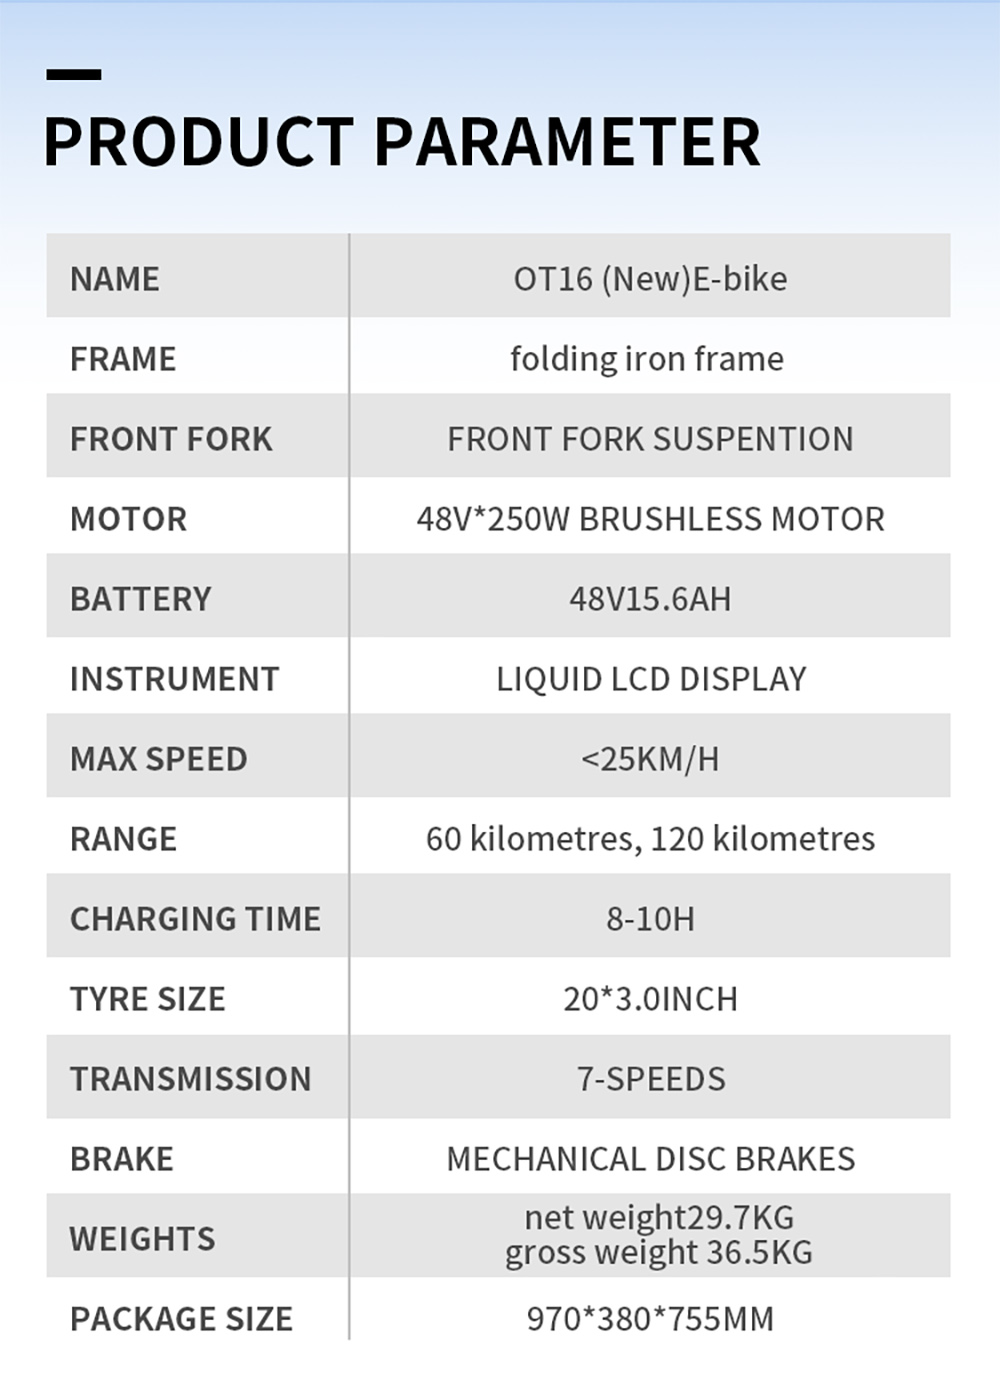 ONESPORT OT16-2 Electric, 250W Motor, 48V 15.6Ah Battery, 20*3.0 inch Tires, 25km/h Max Speed, 120km Range, Mechanical Disc Bra